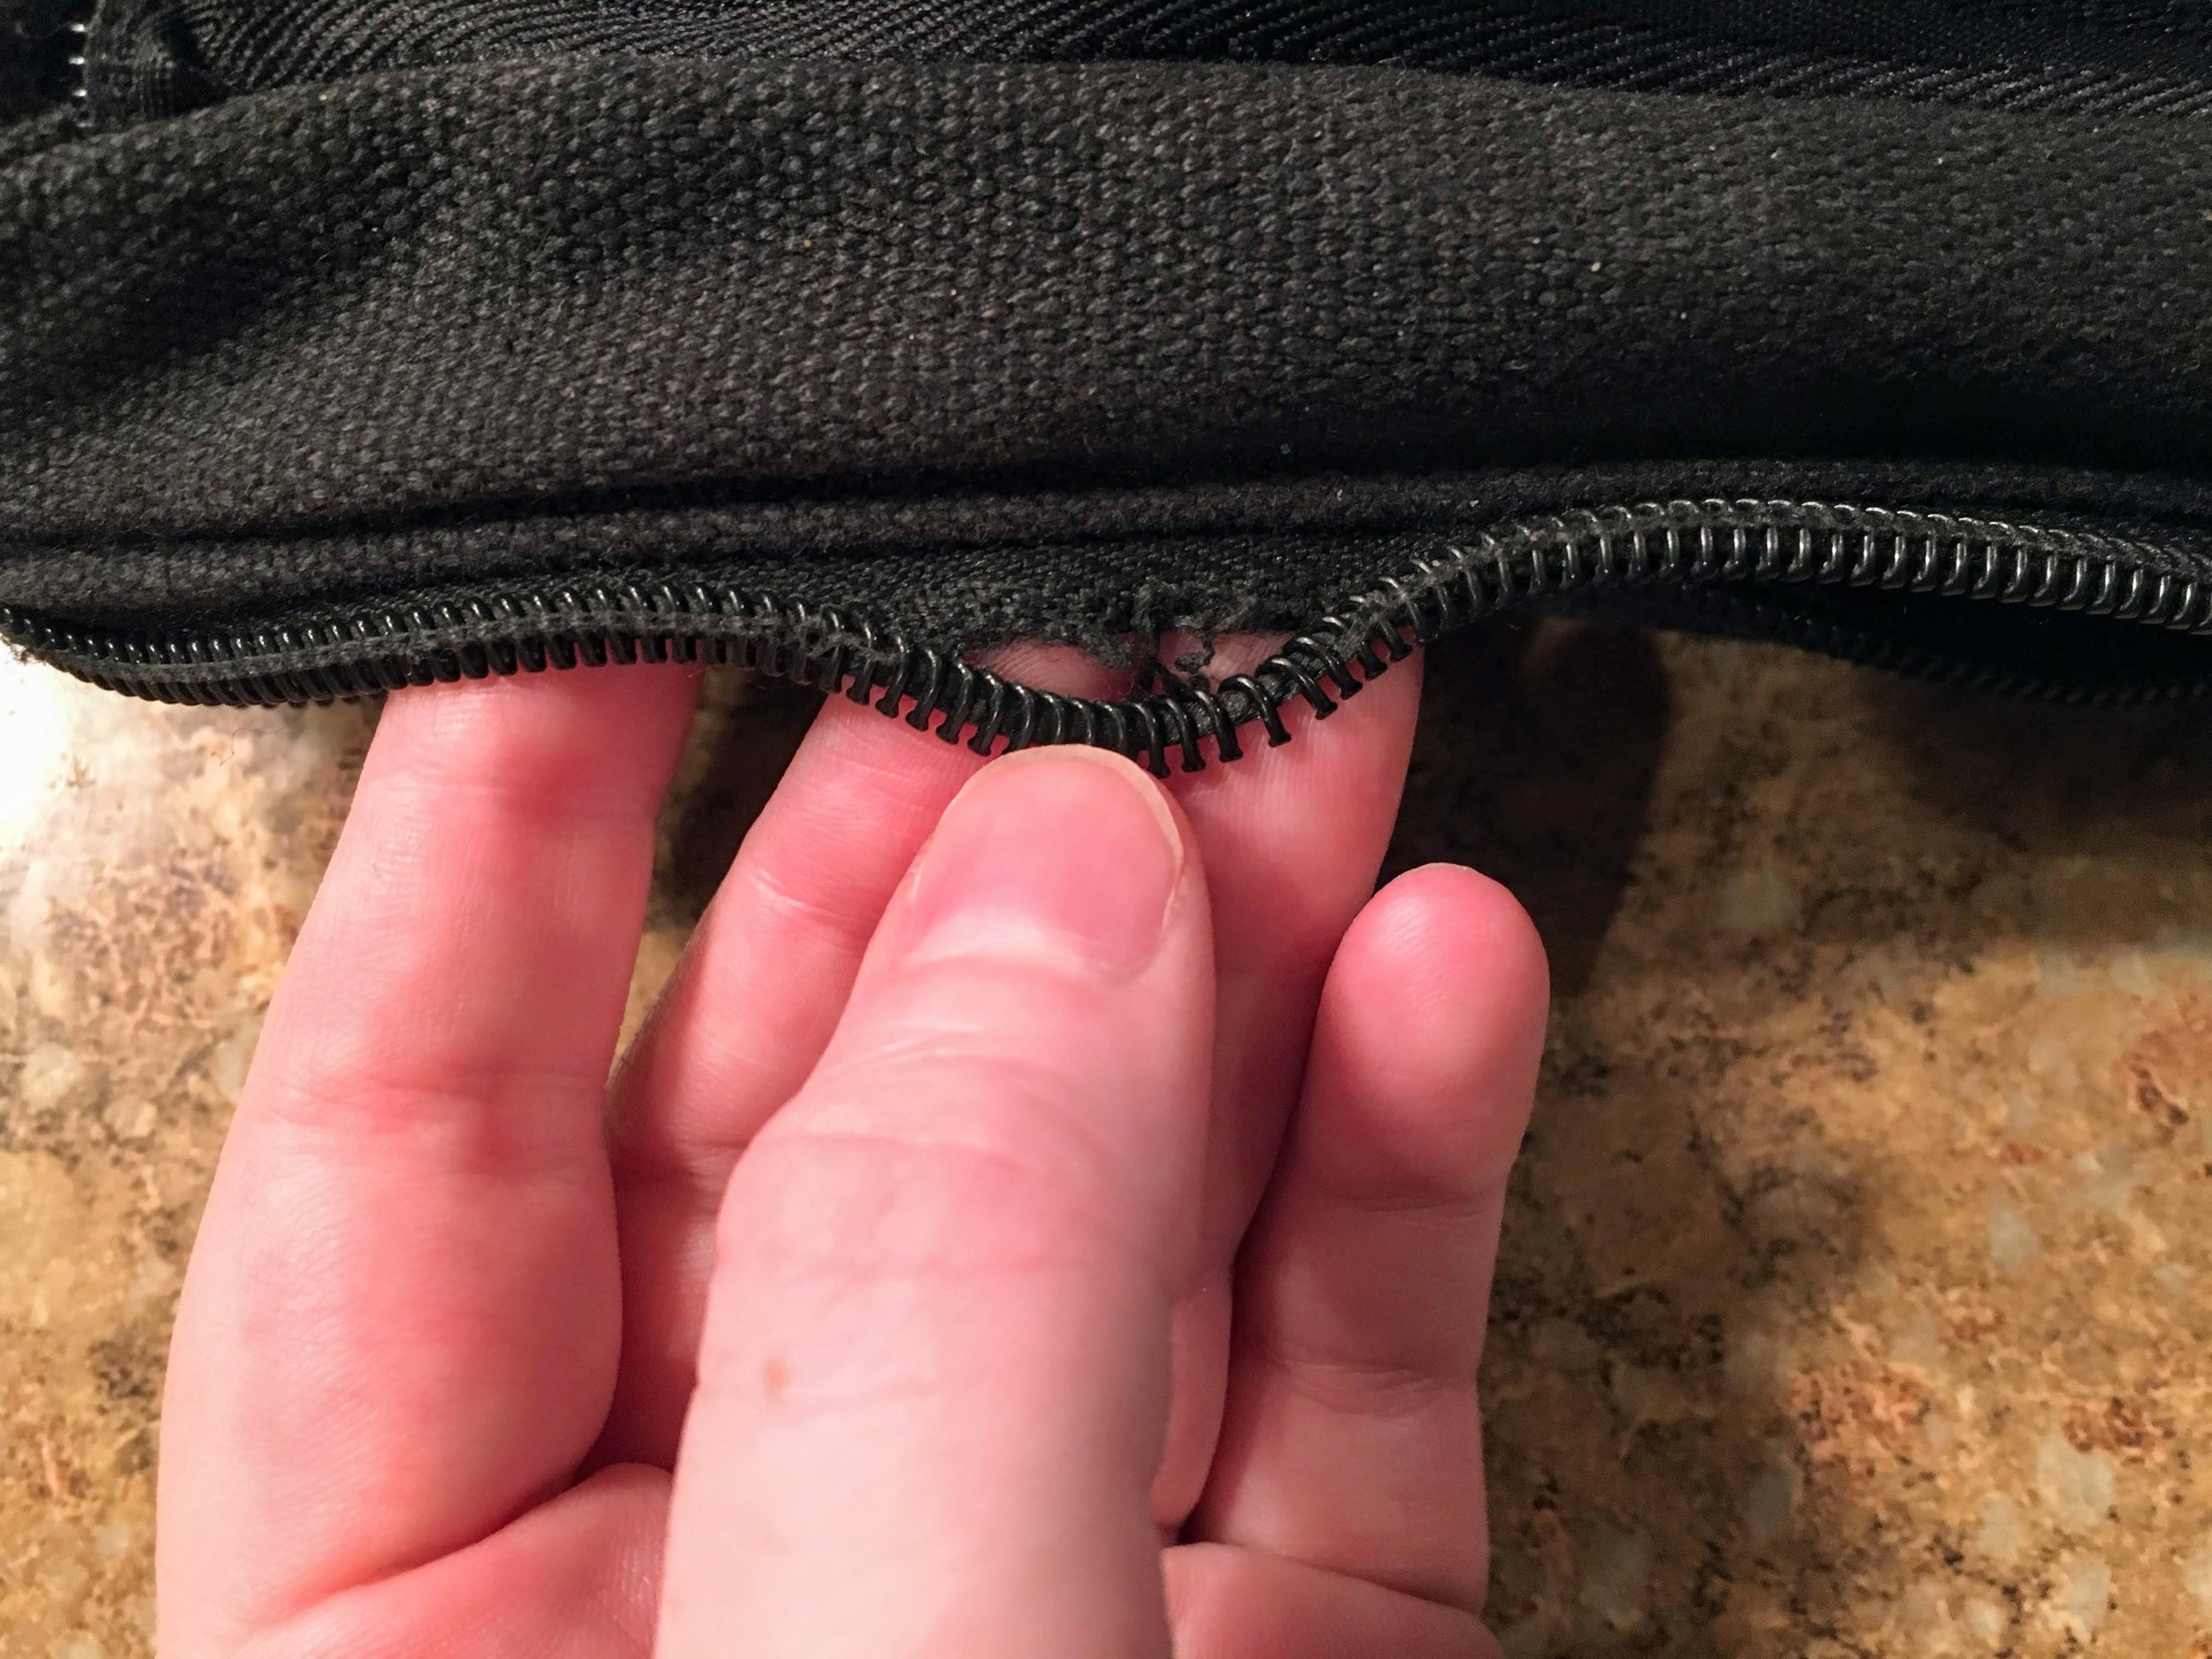 How To Fix a Zipper on a Bag